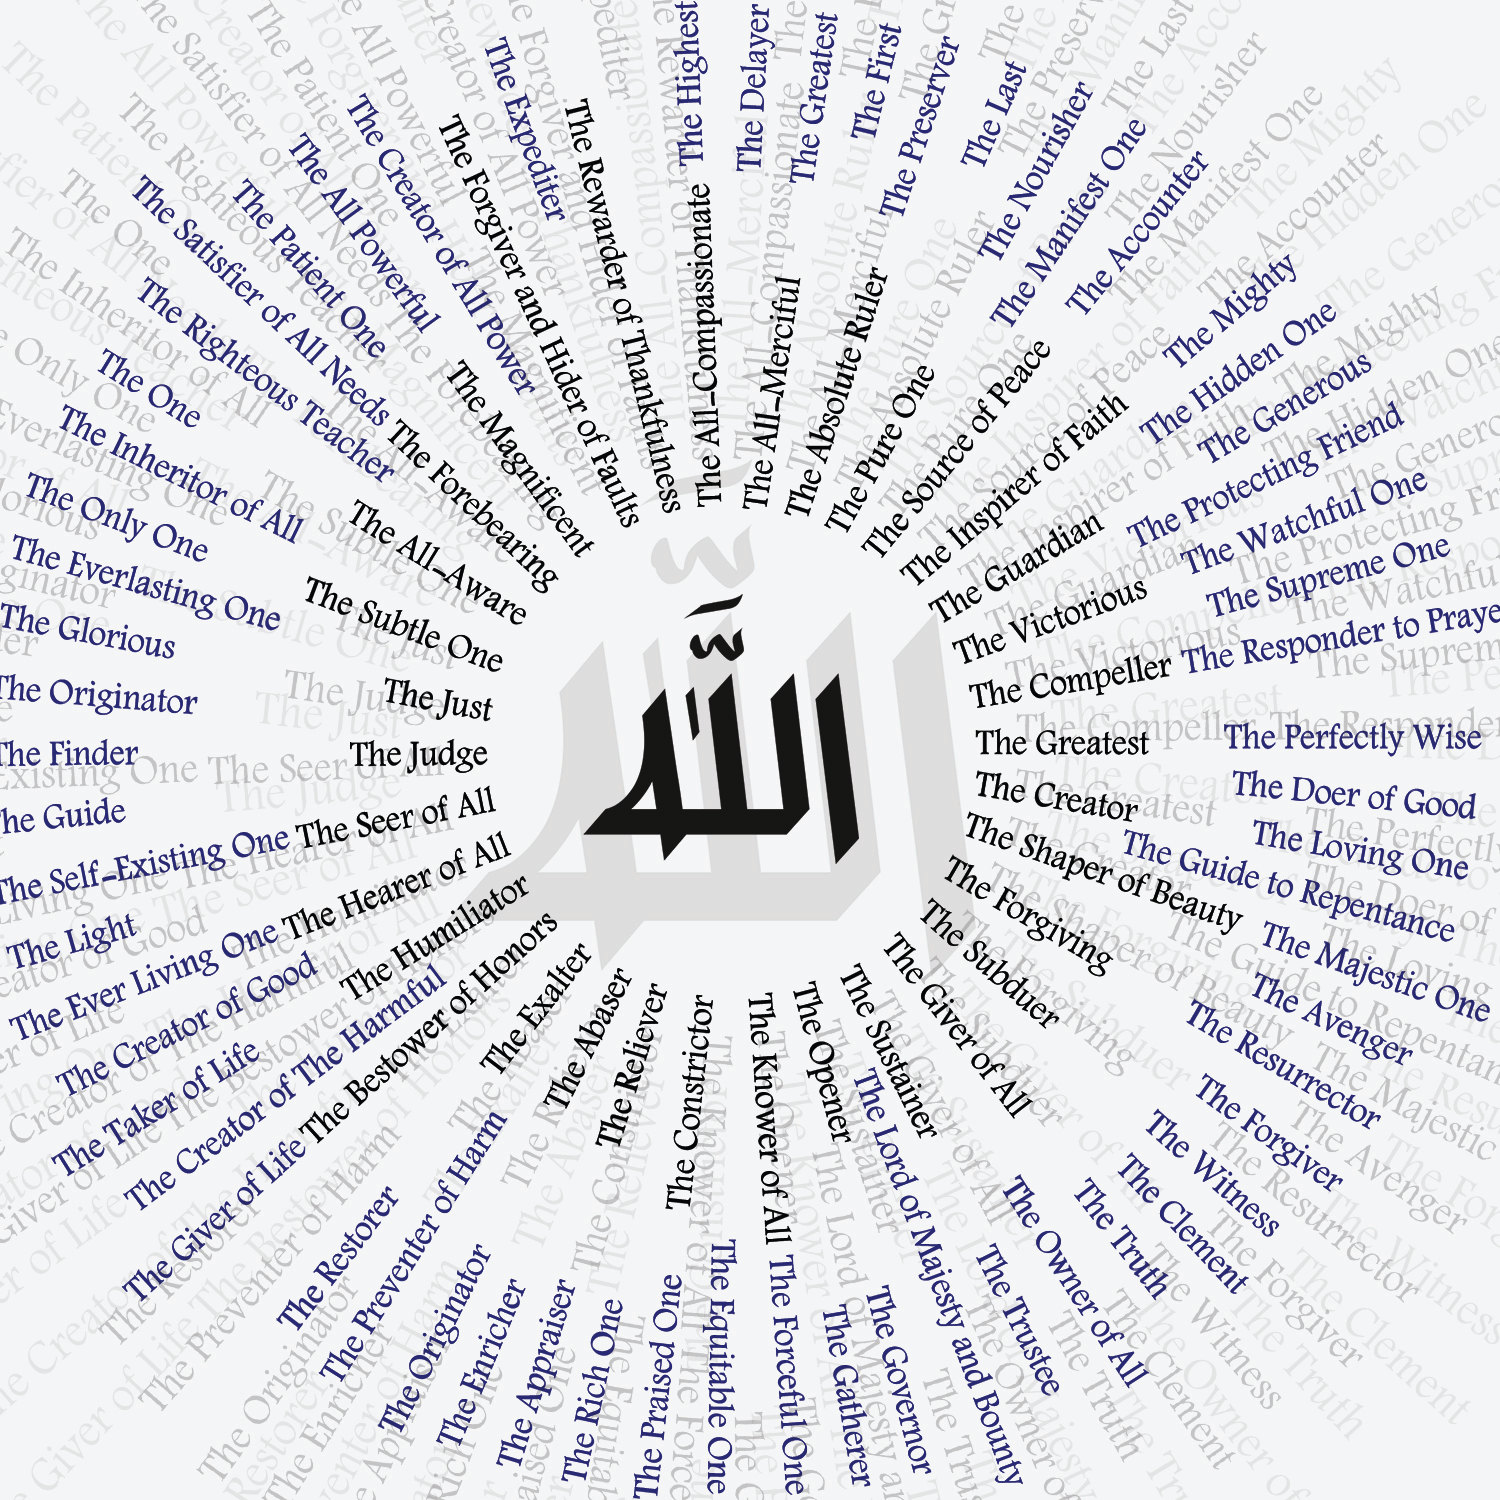 beautiful-names-of-allah-part-1-islamicity